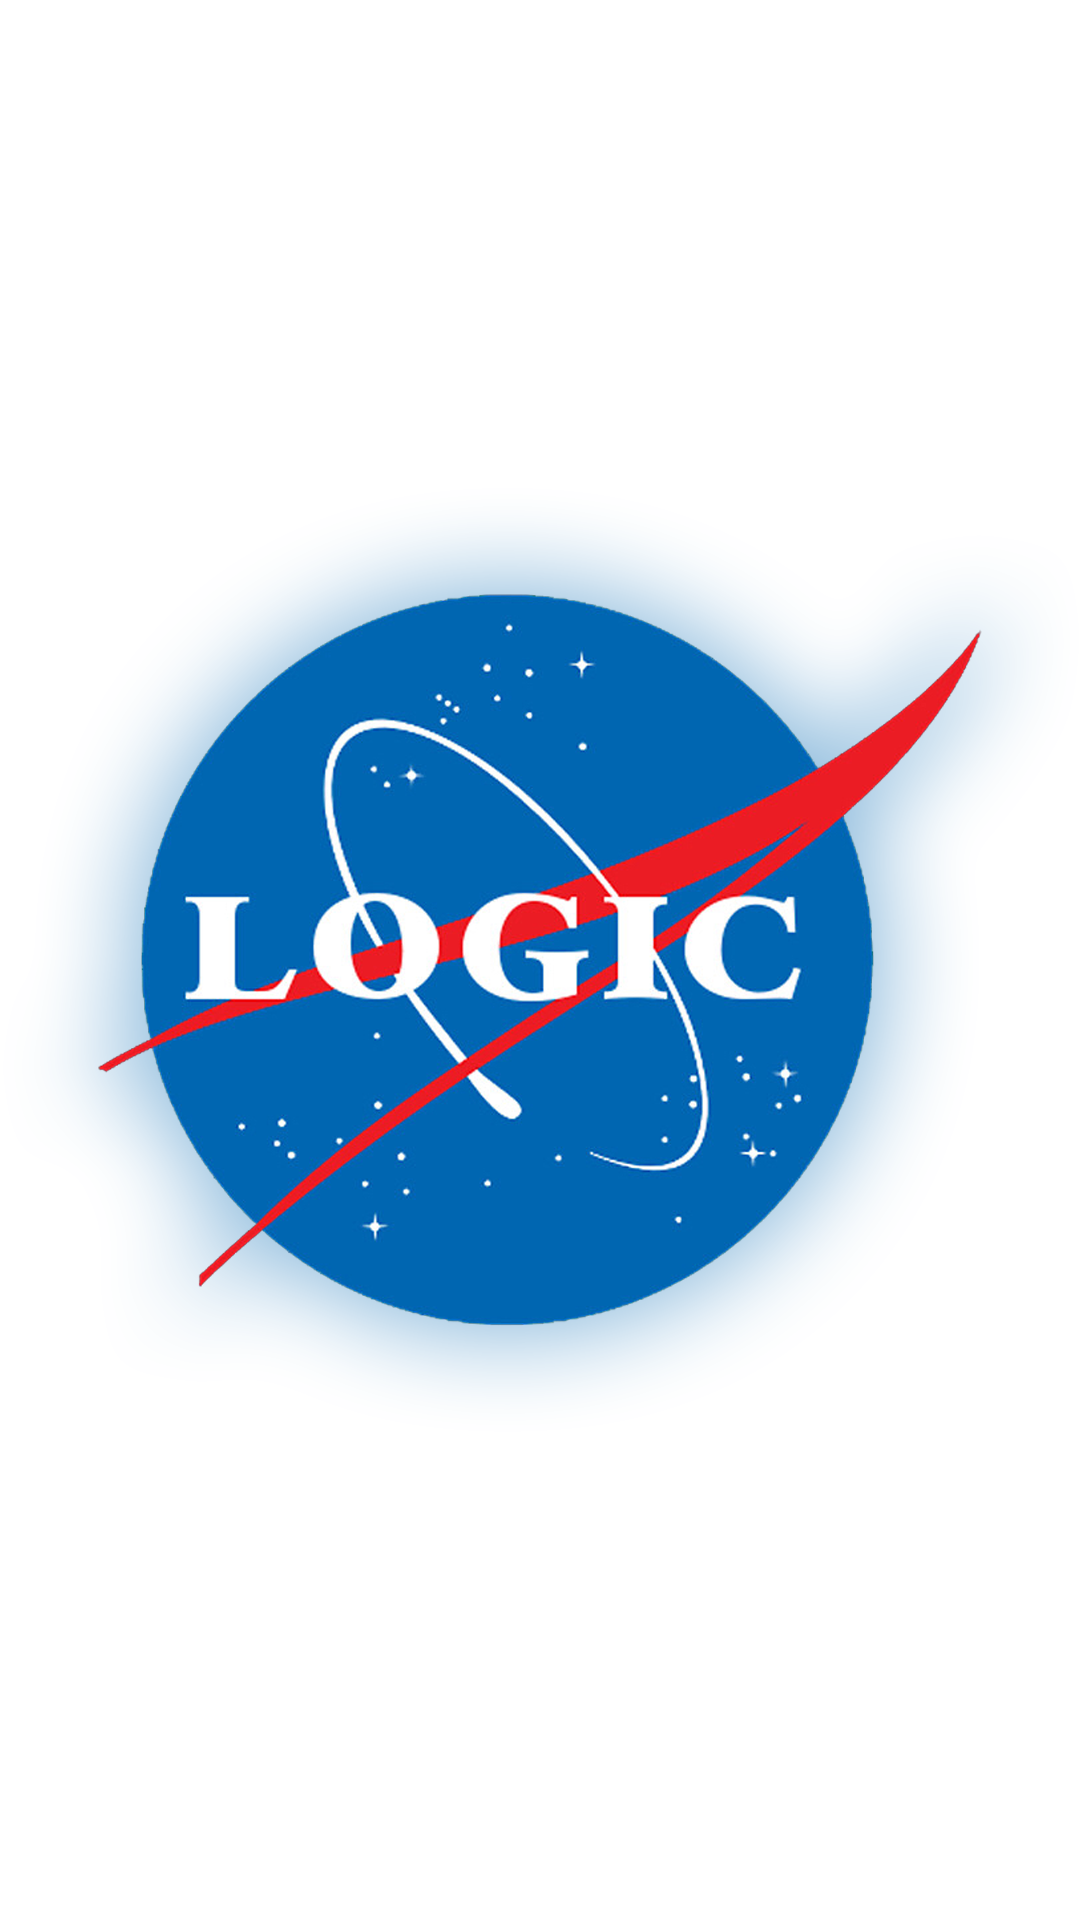 Logic NASA Style Logo Wallpaper (Mobile Size) by HalukAliev on DeviantArt